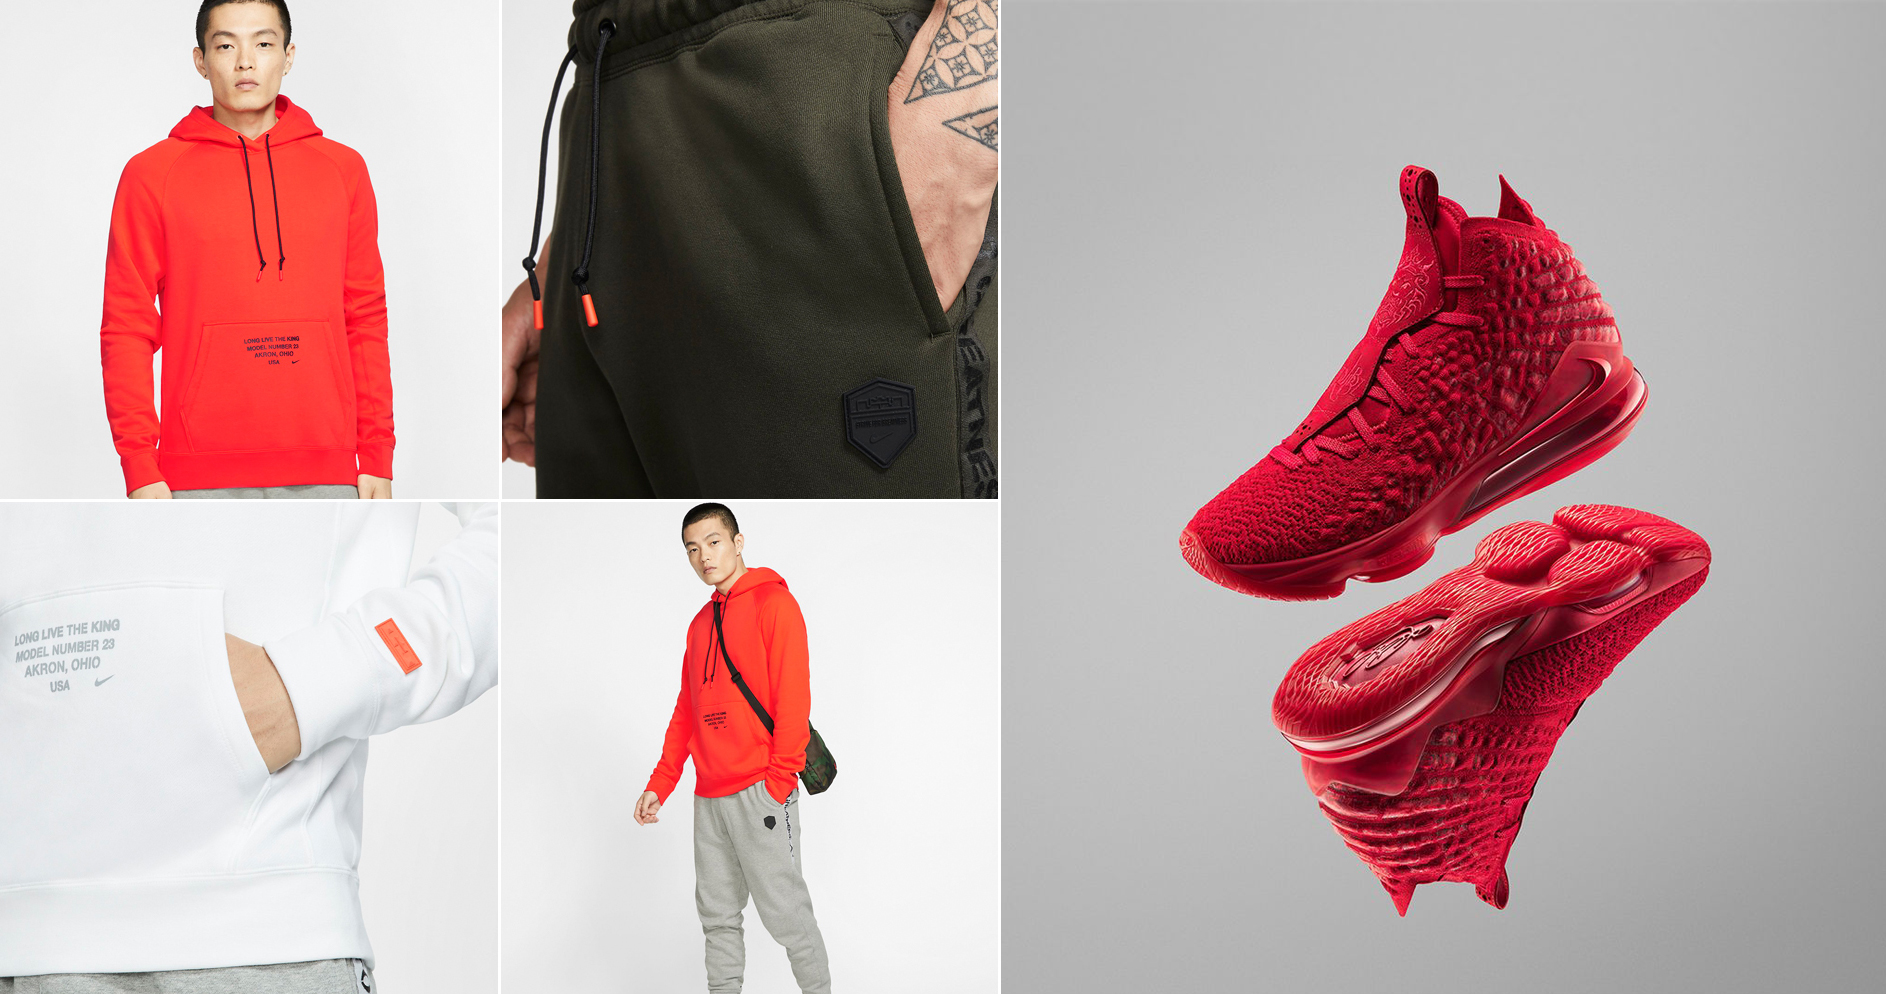 Nike LeBron 17 Red Carpet Clothing Match | SneakerFits.com